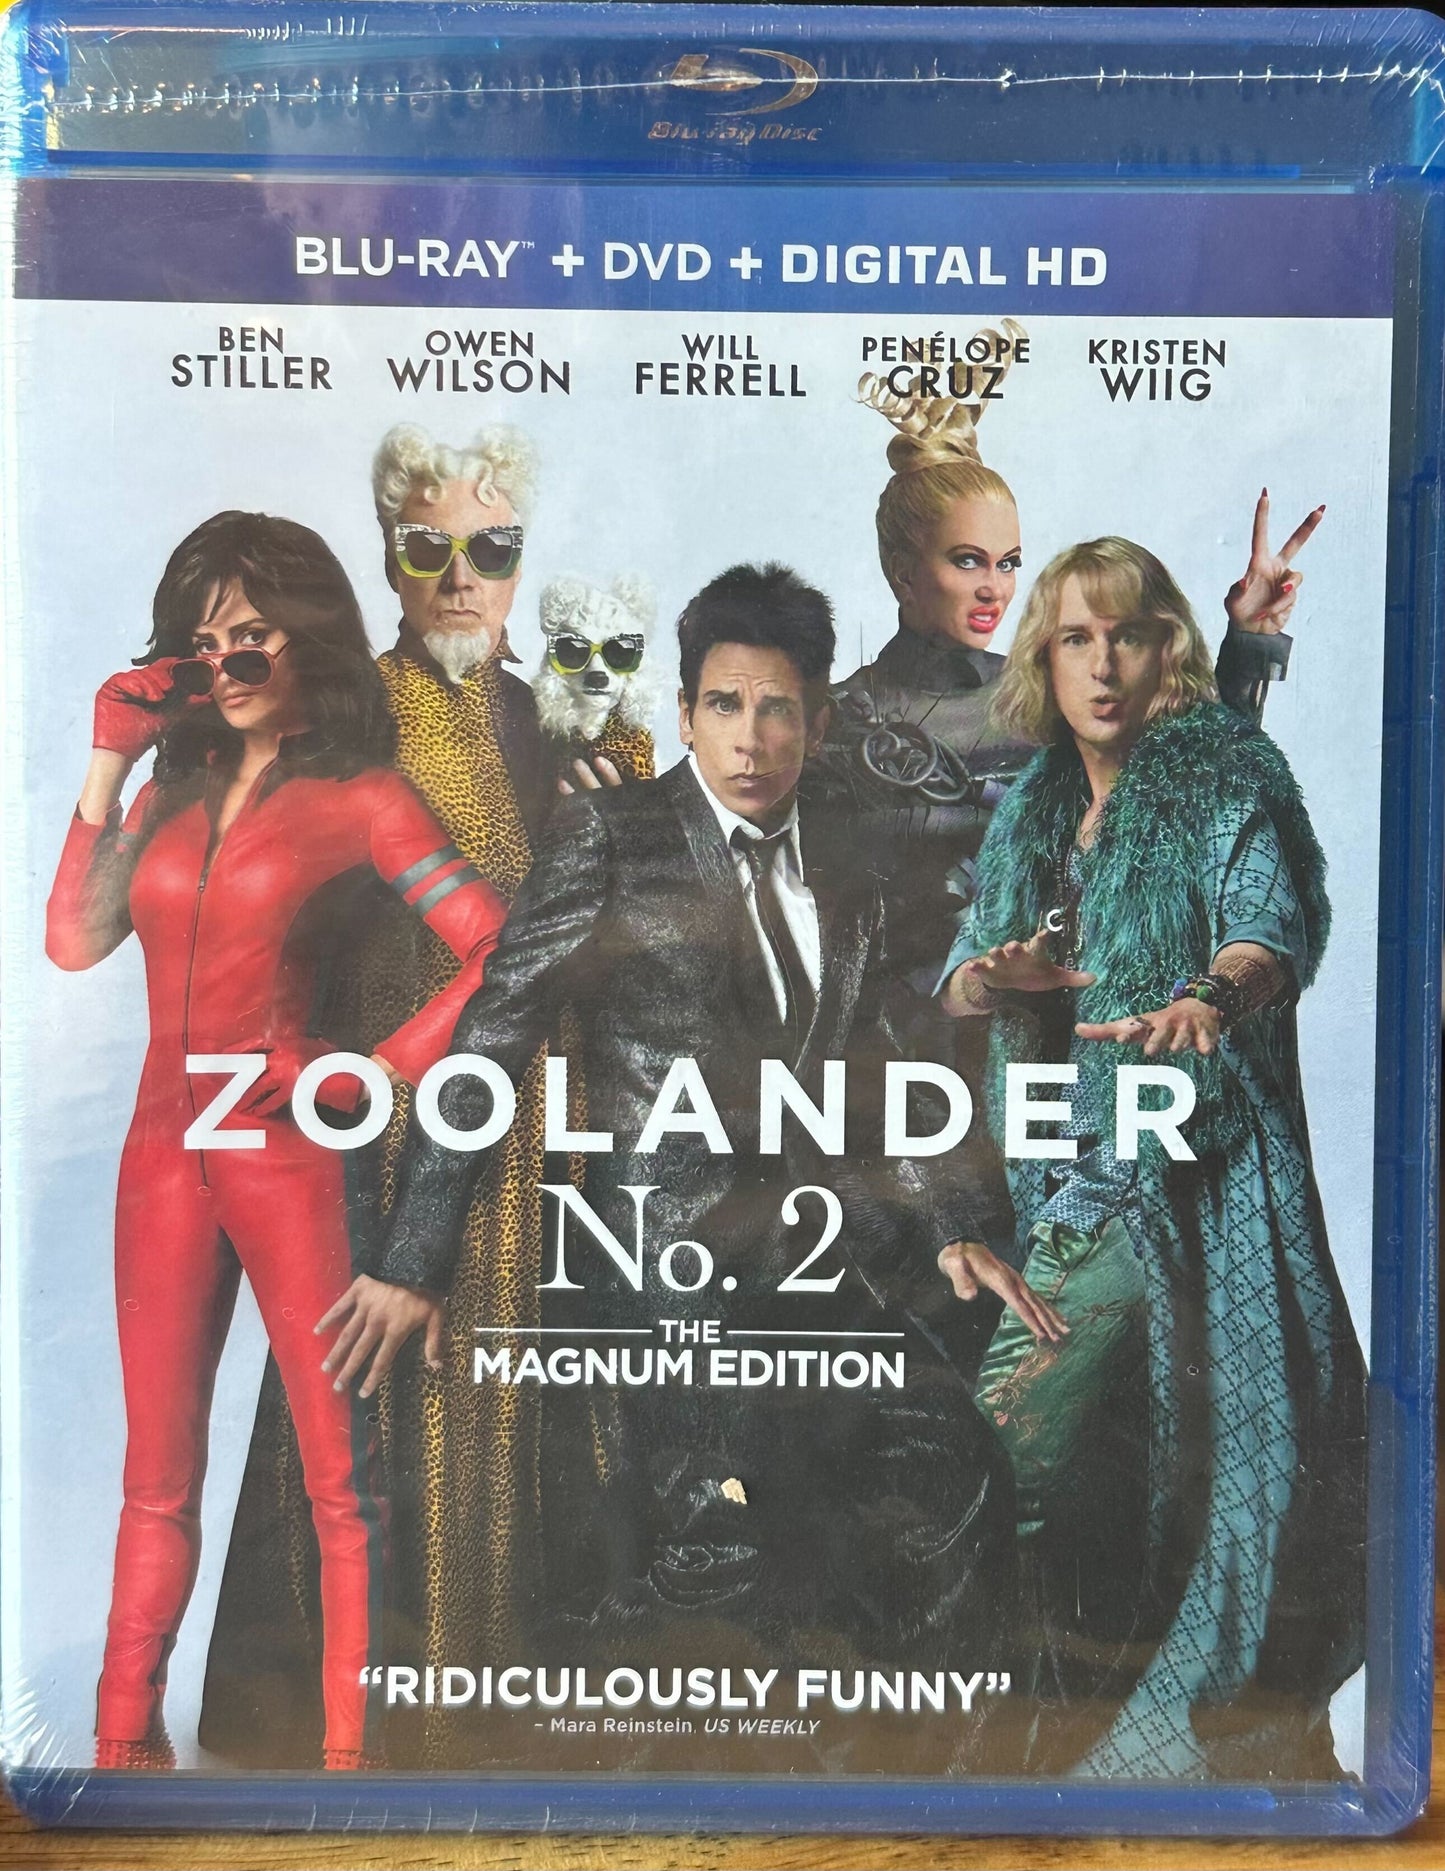 Zoolander No. 2 (The Magnum Edition) Blu-ray